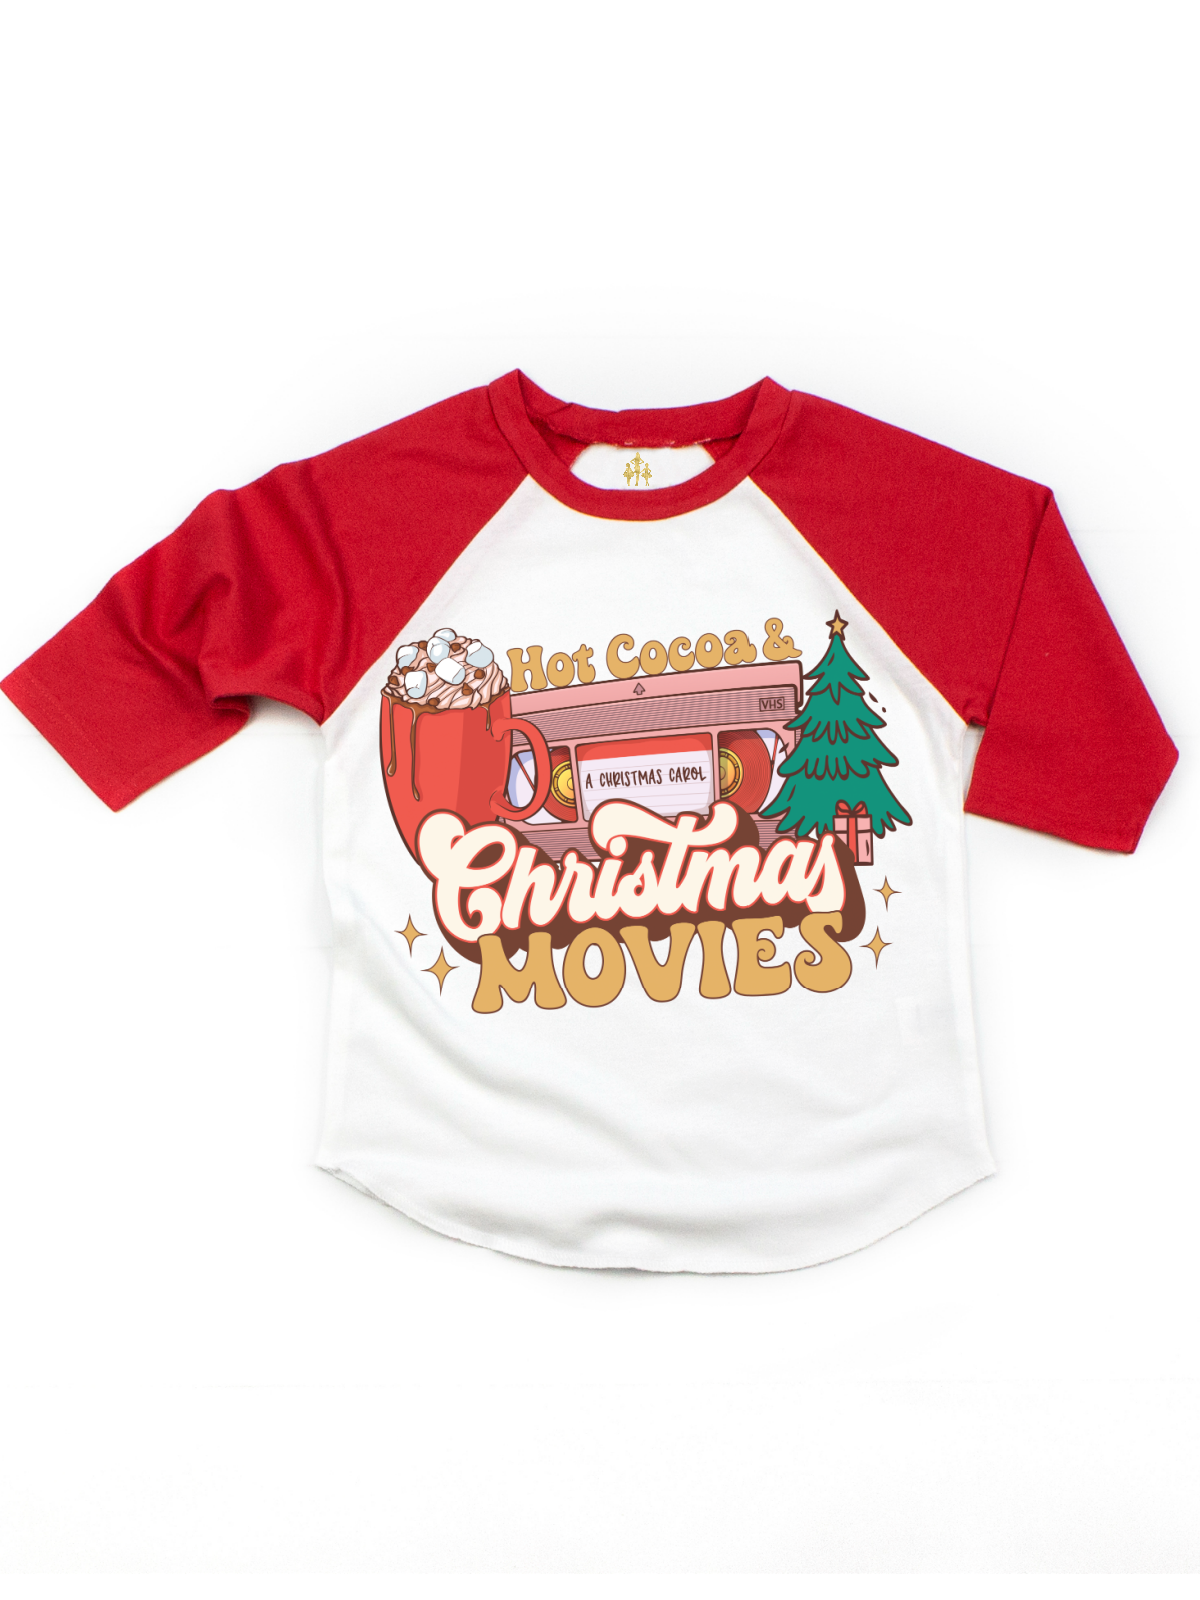 Hot Cocoa and Christmas Movies Kids Shirt